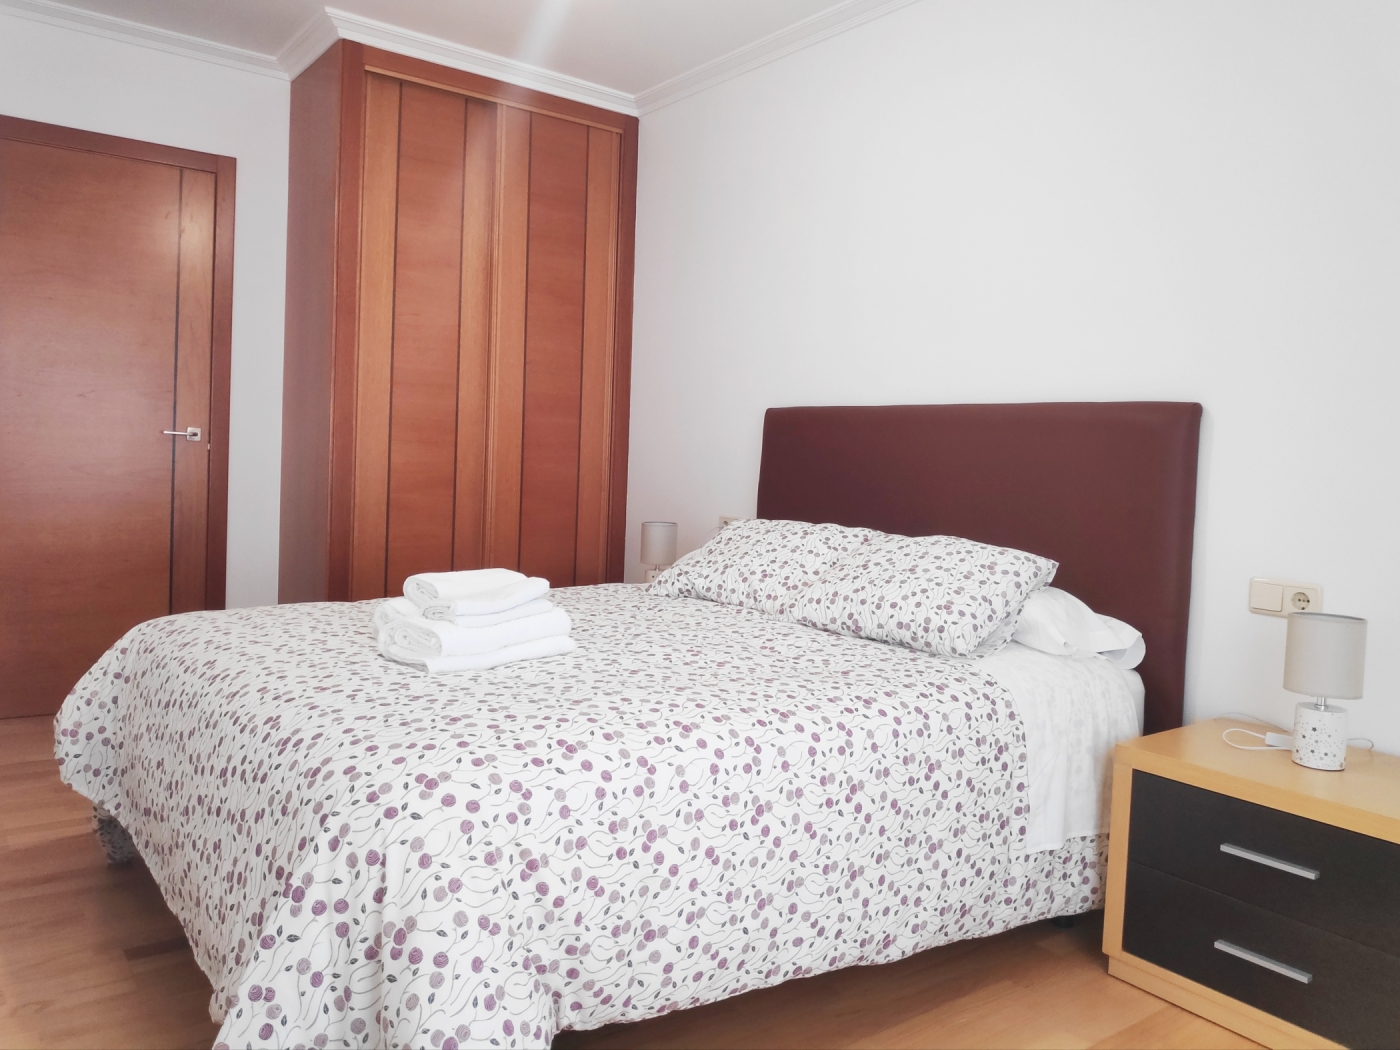 Apartamento Naval - Confortable para familias in Marín